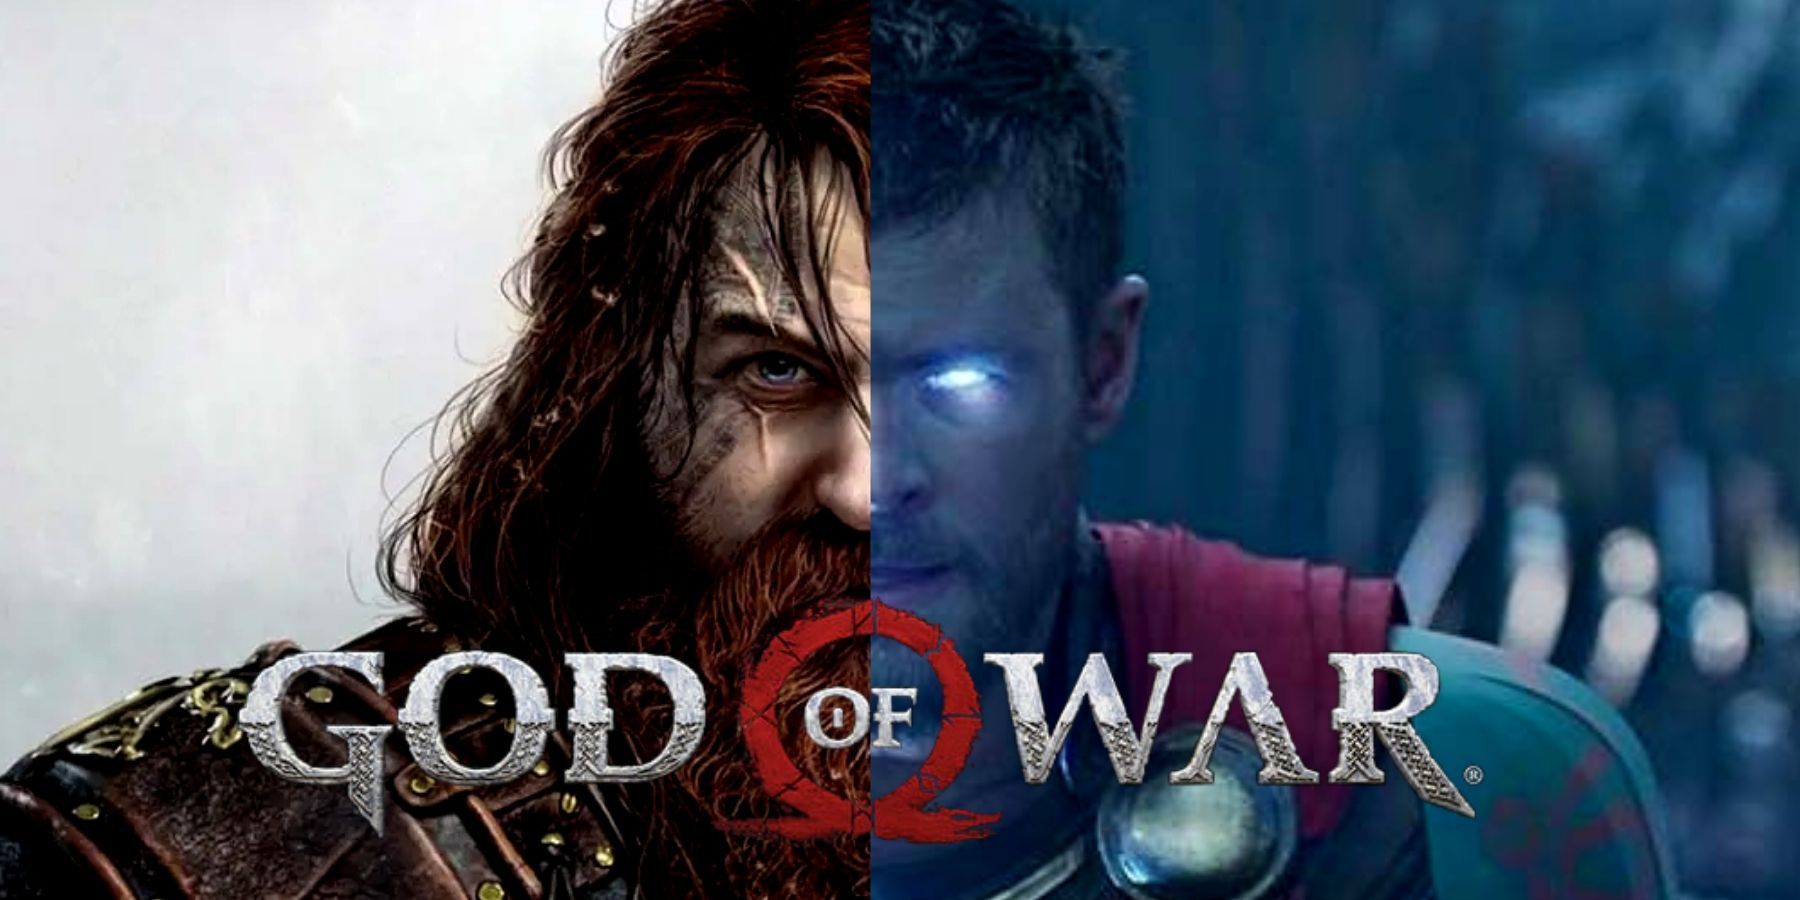 God of War Ragnarok Gives First Look at Thor